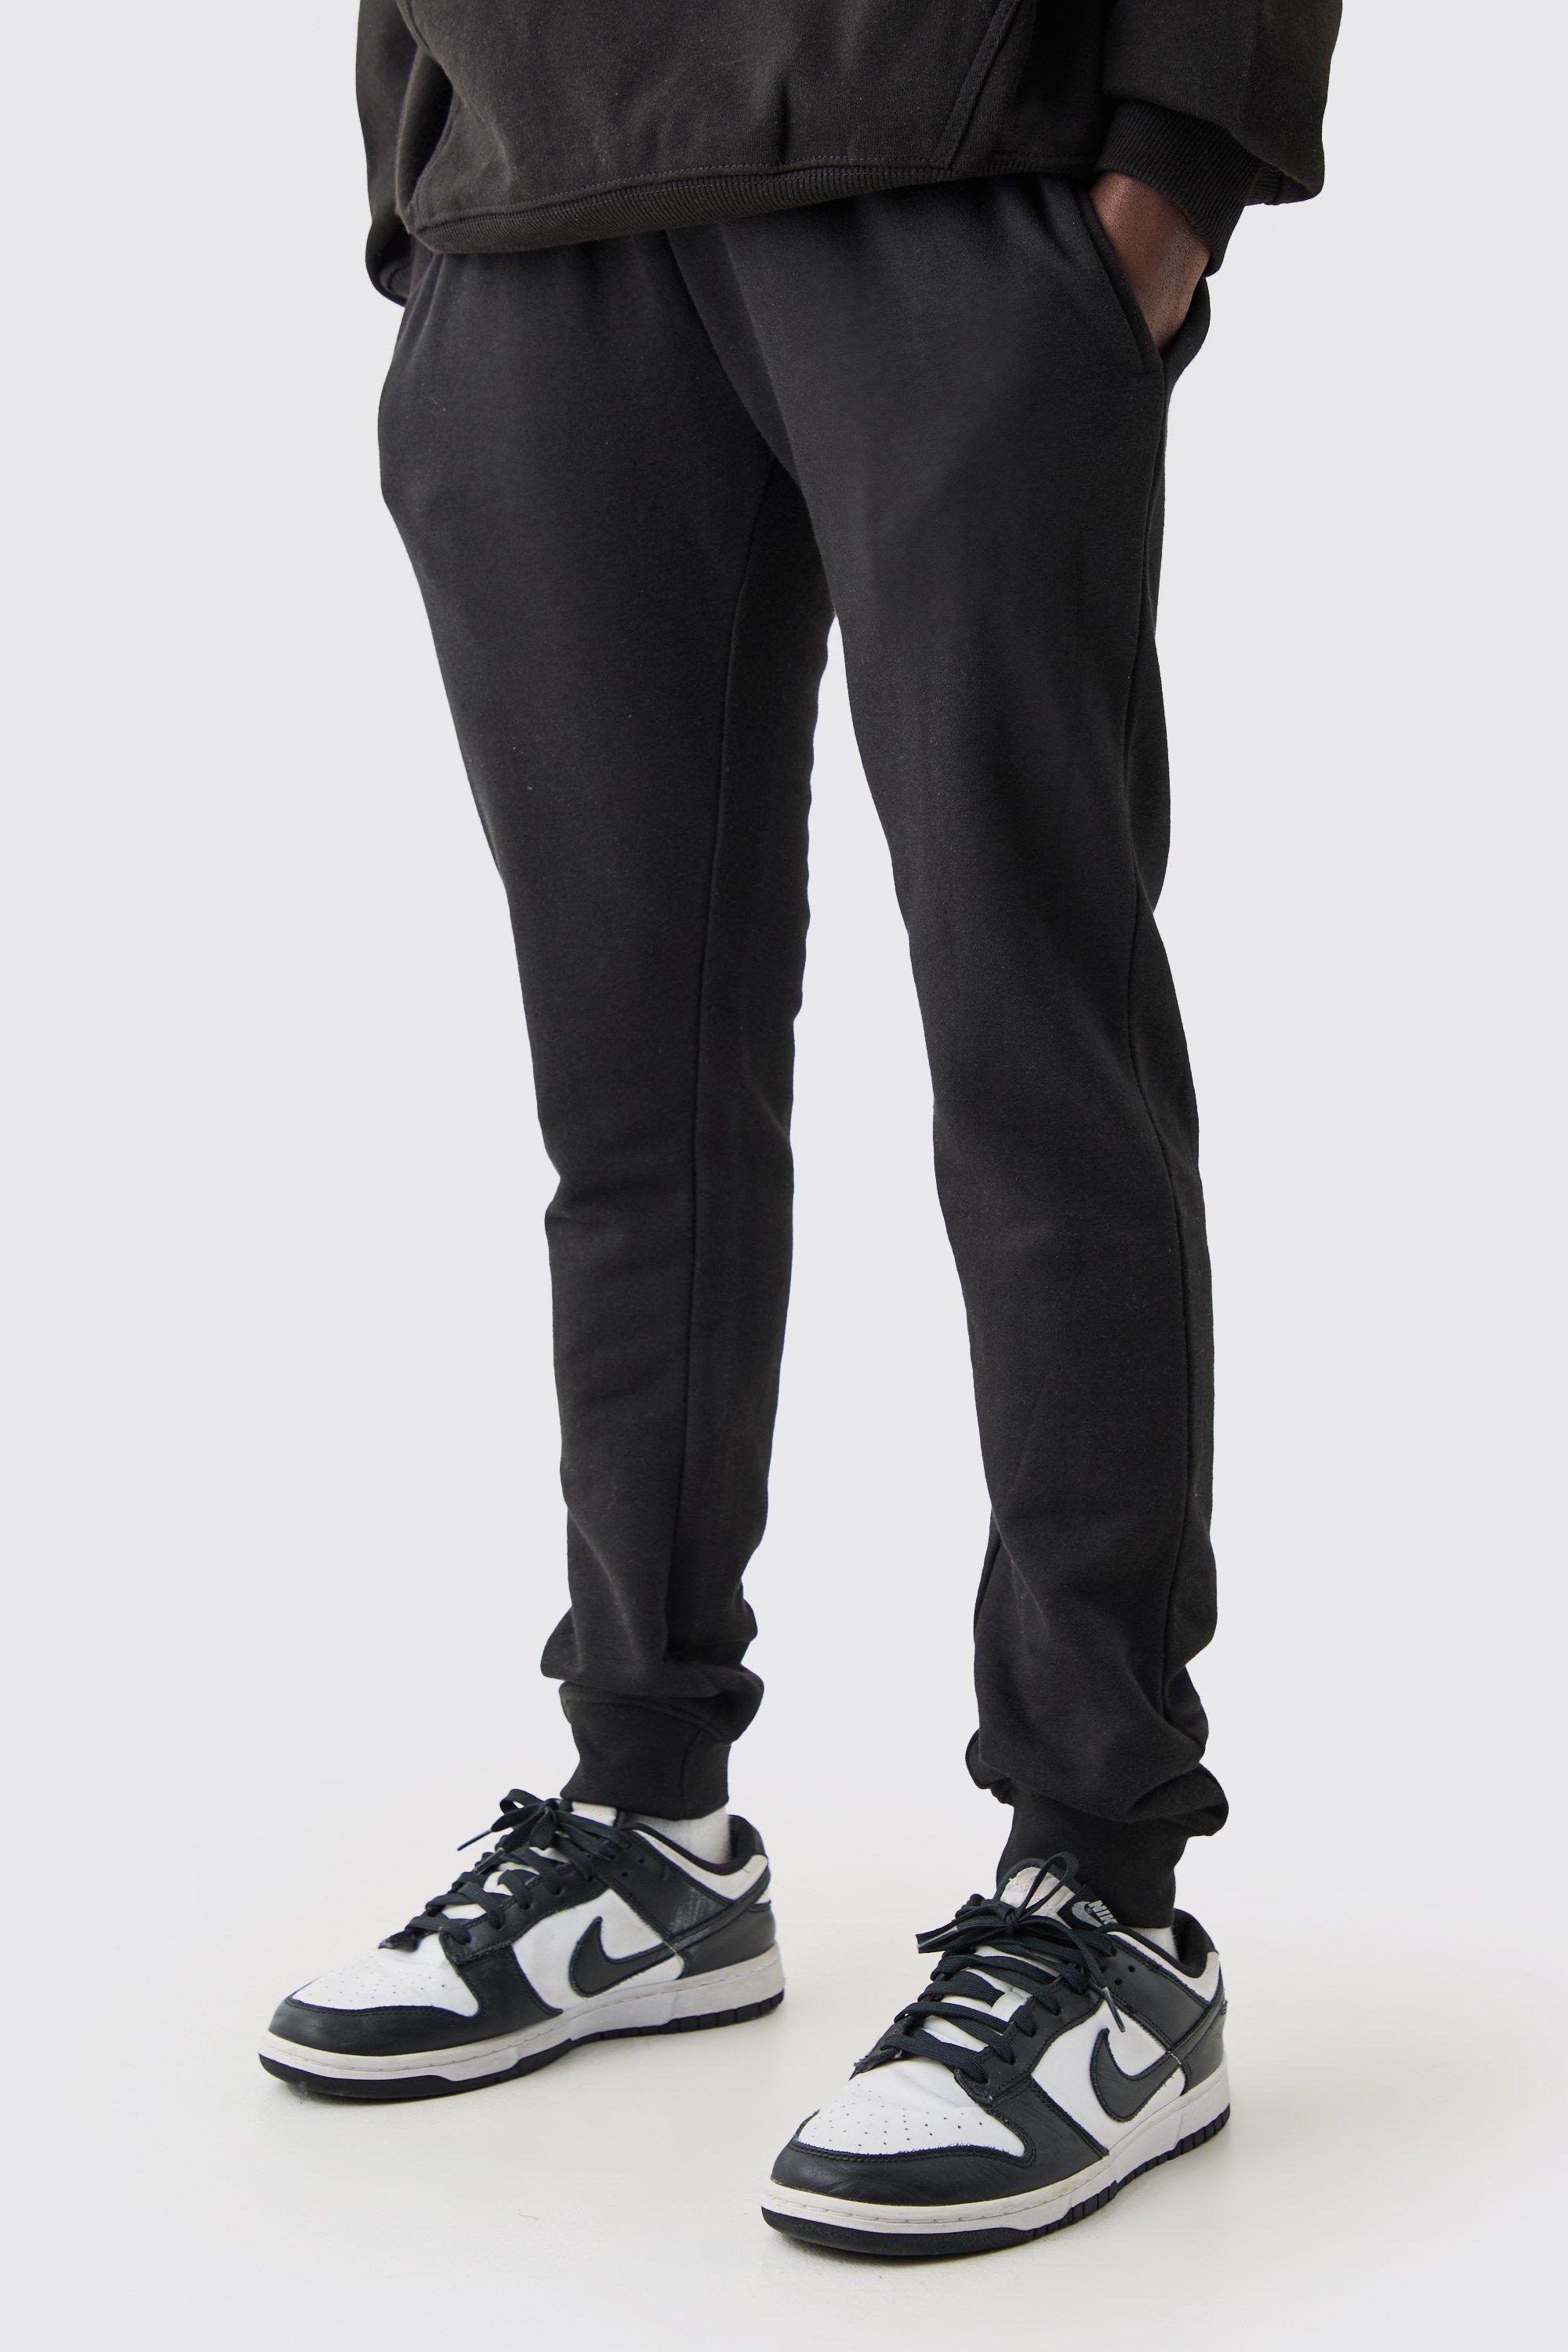 Image of Pantaloni tuta Super Skinny Fit, Nero